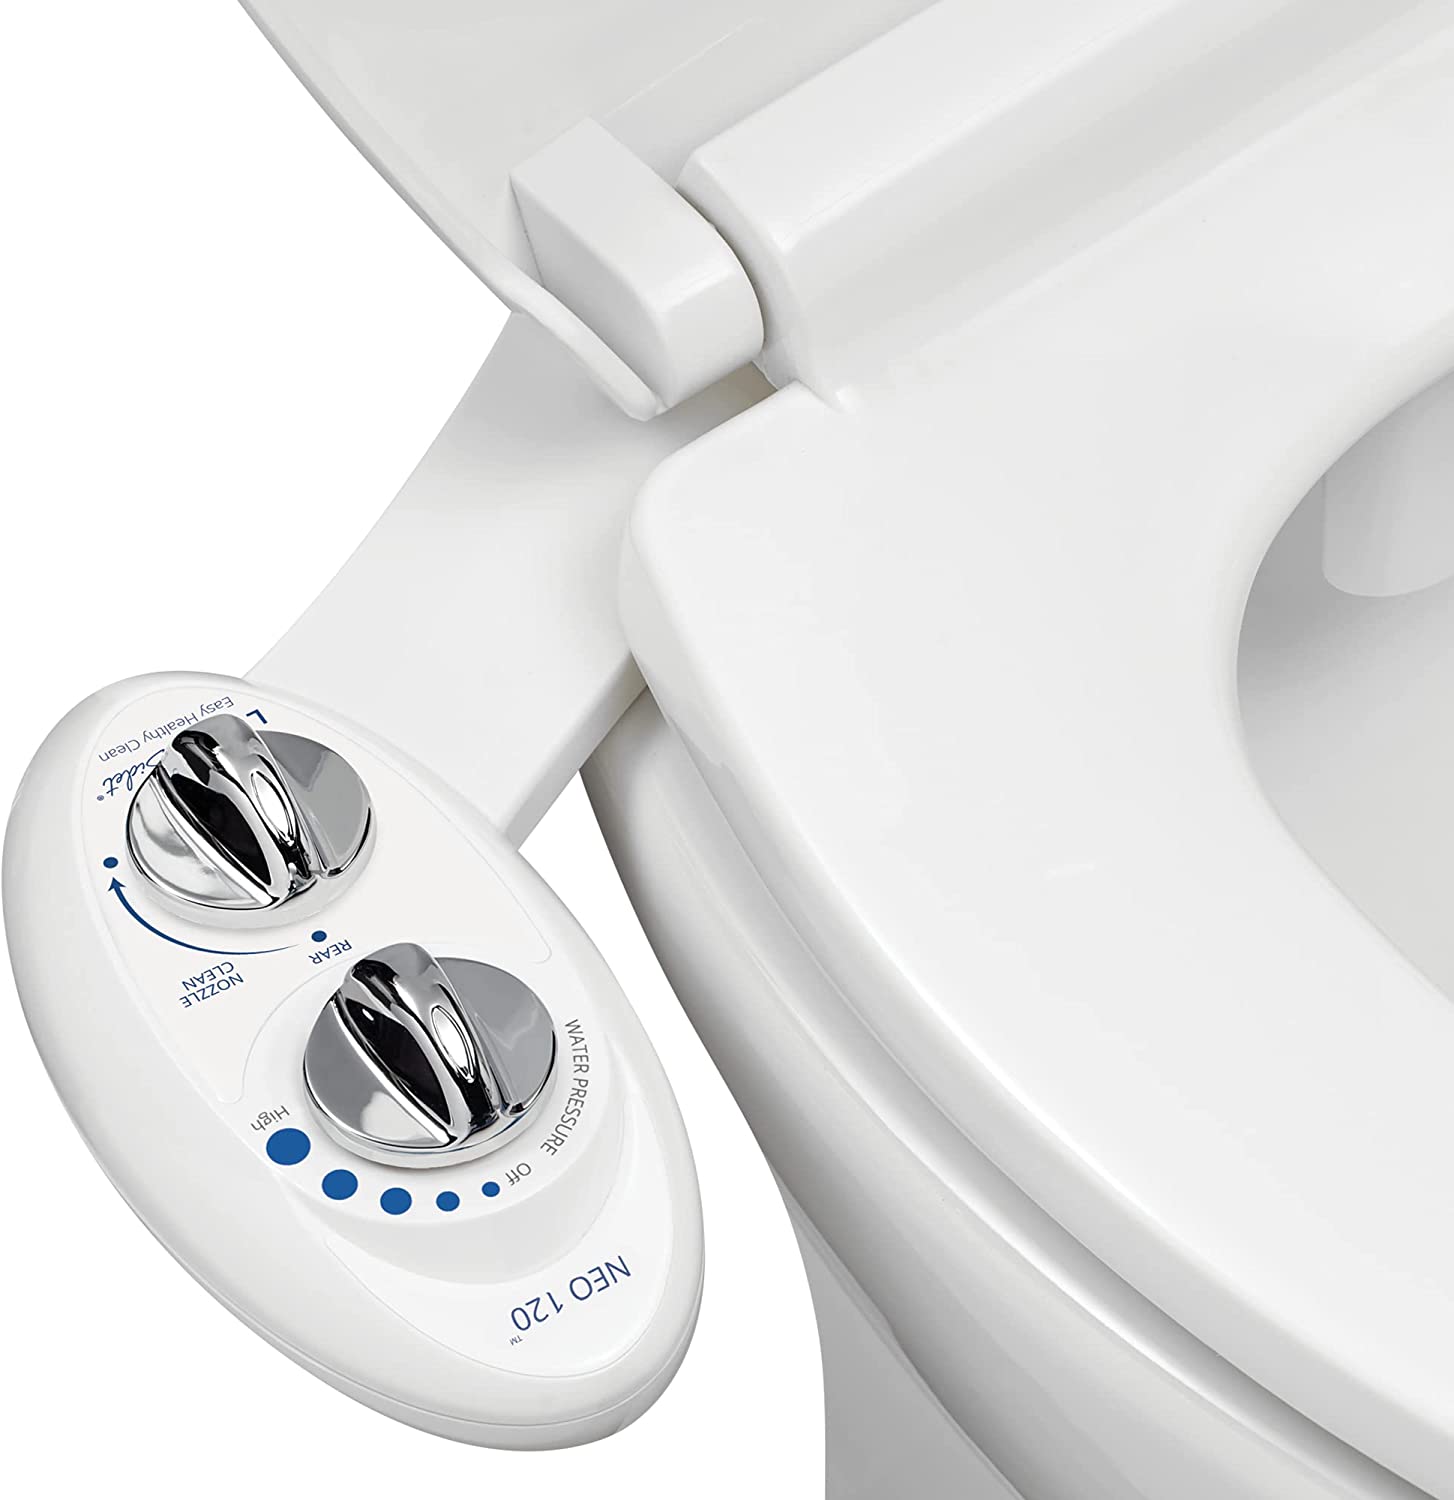 Luxe Bidet Neo 120 Hygienic Eco-Friendly Bidet Toilet Attachment